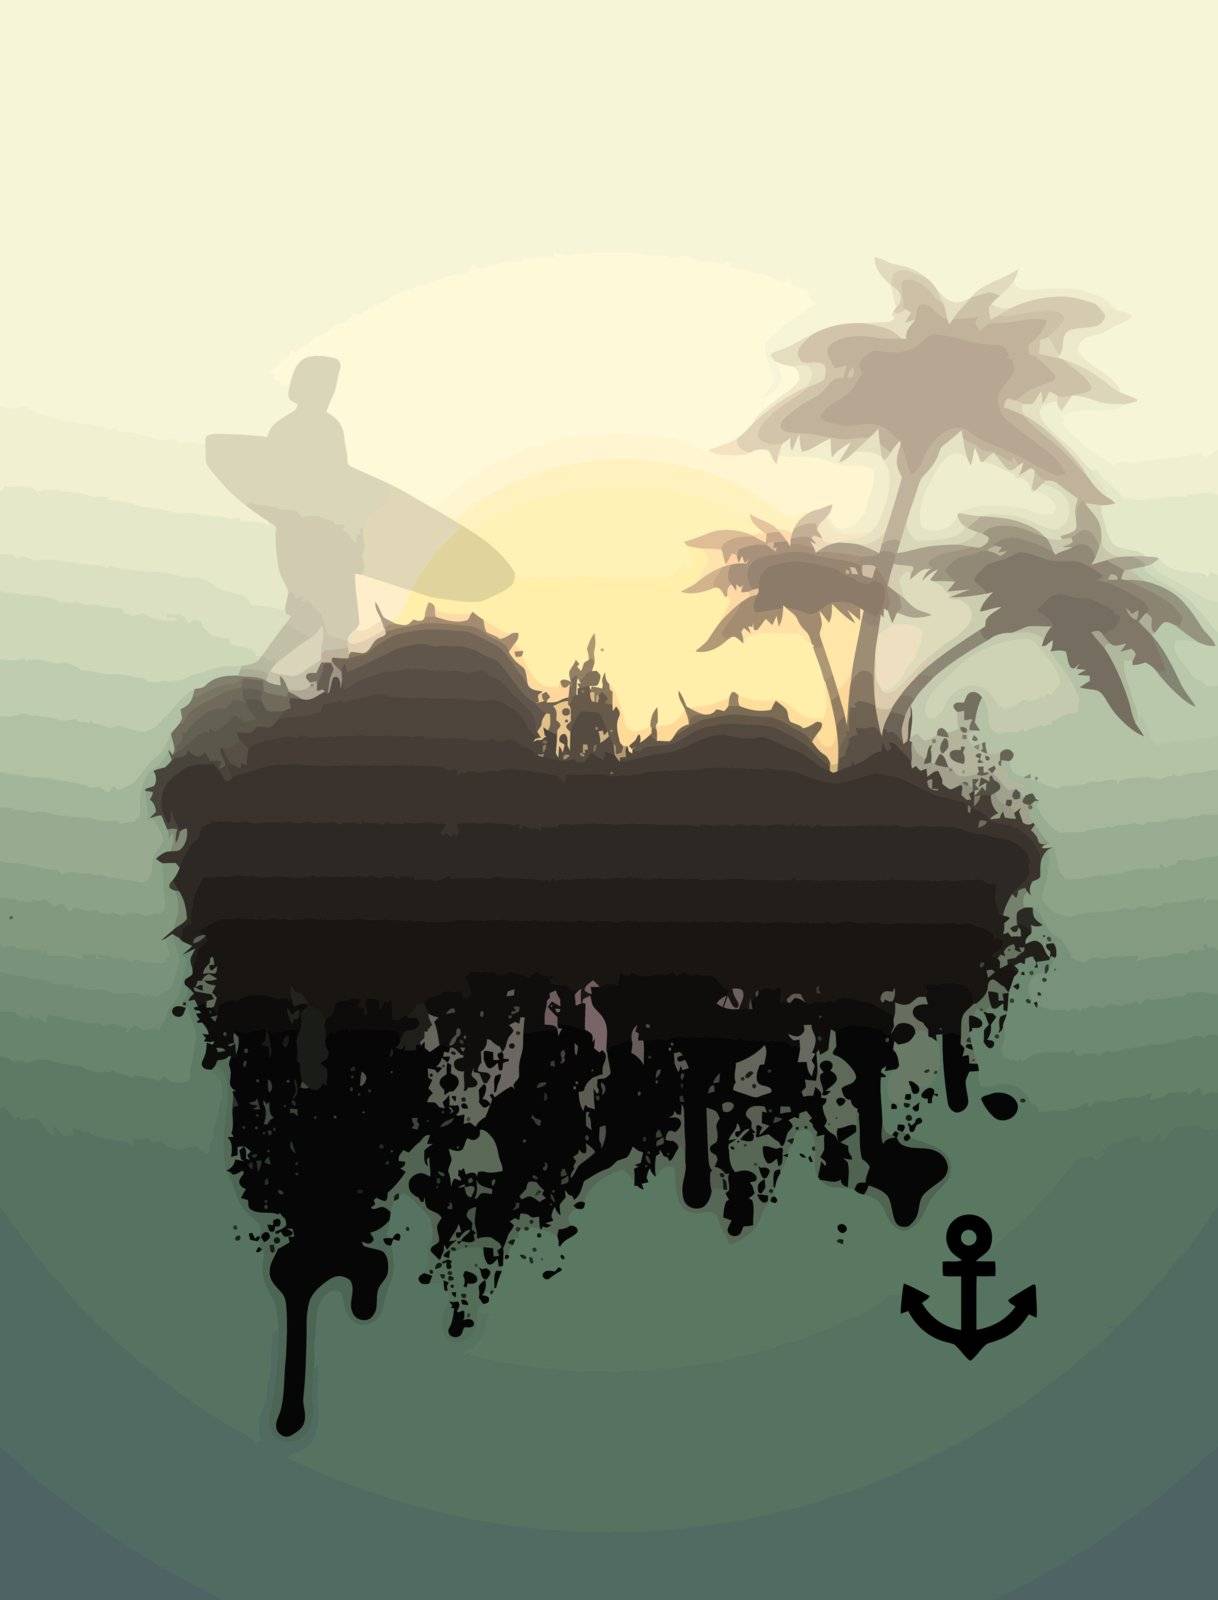 Surfer on foggy tropical place grunge background, vector illustration